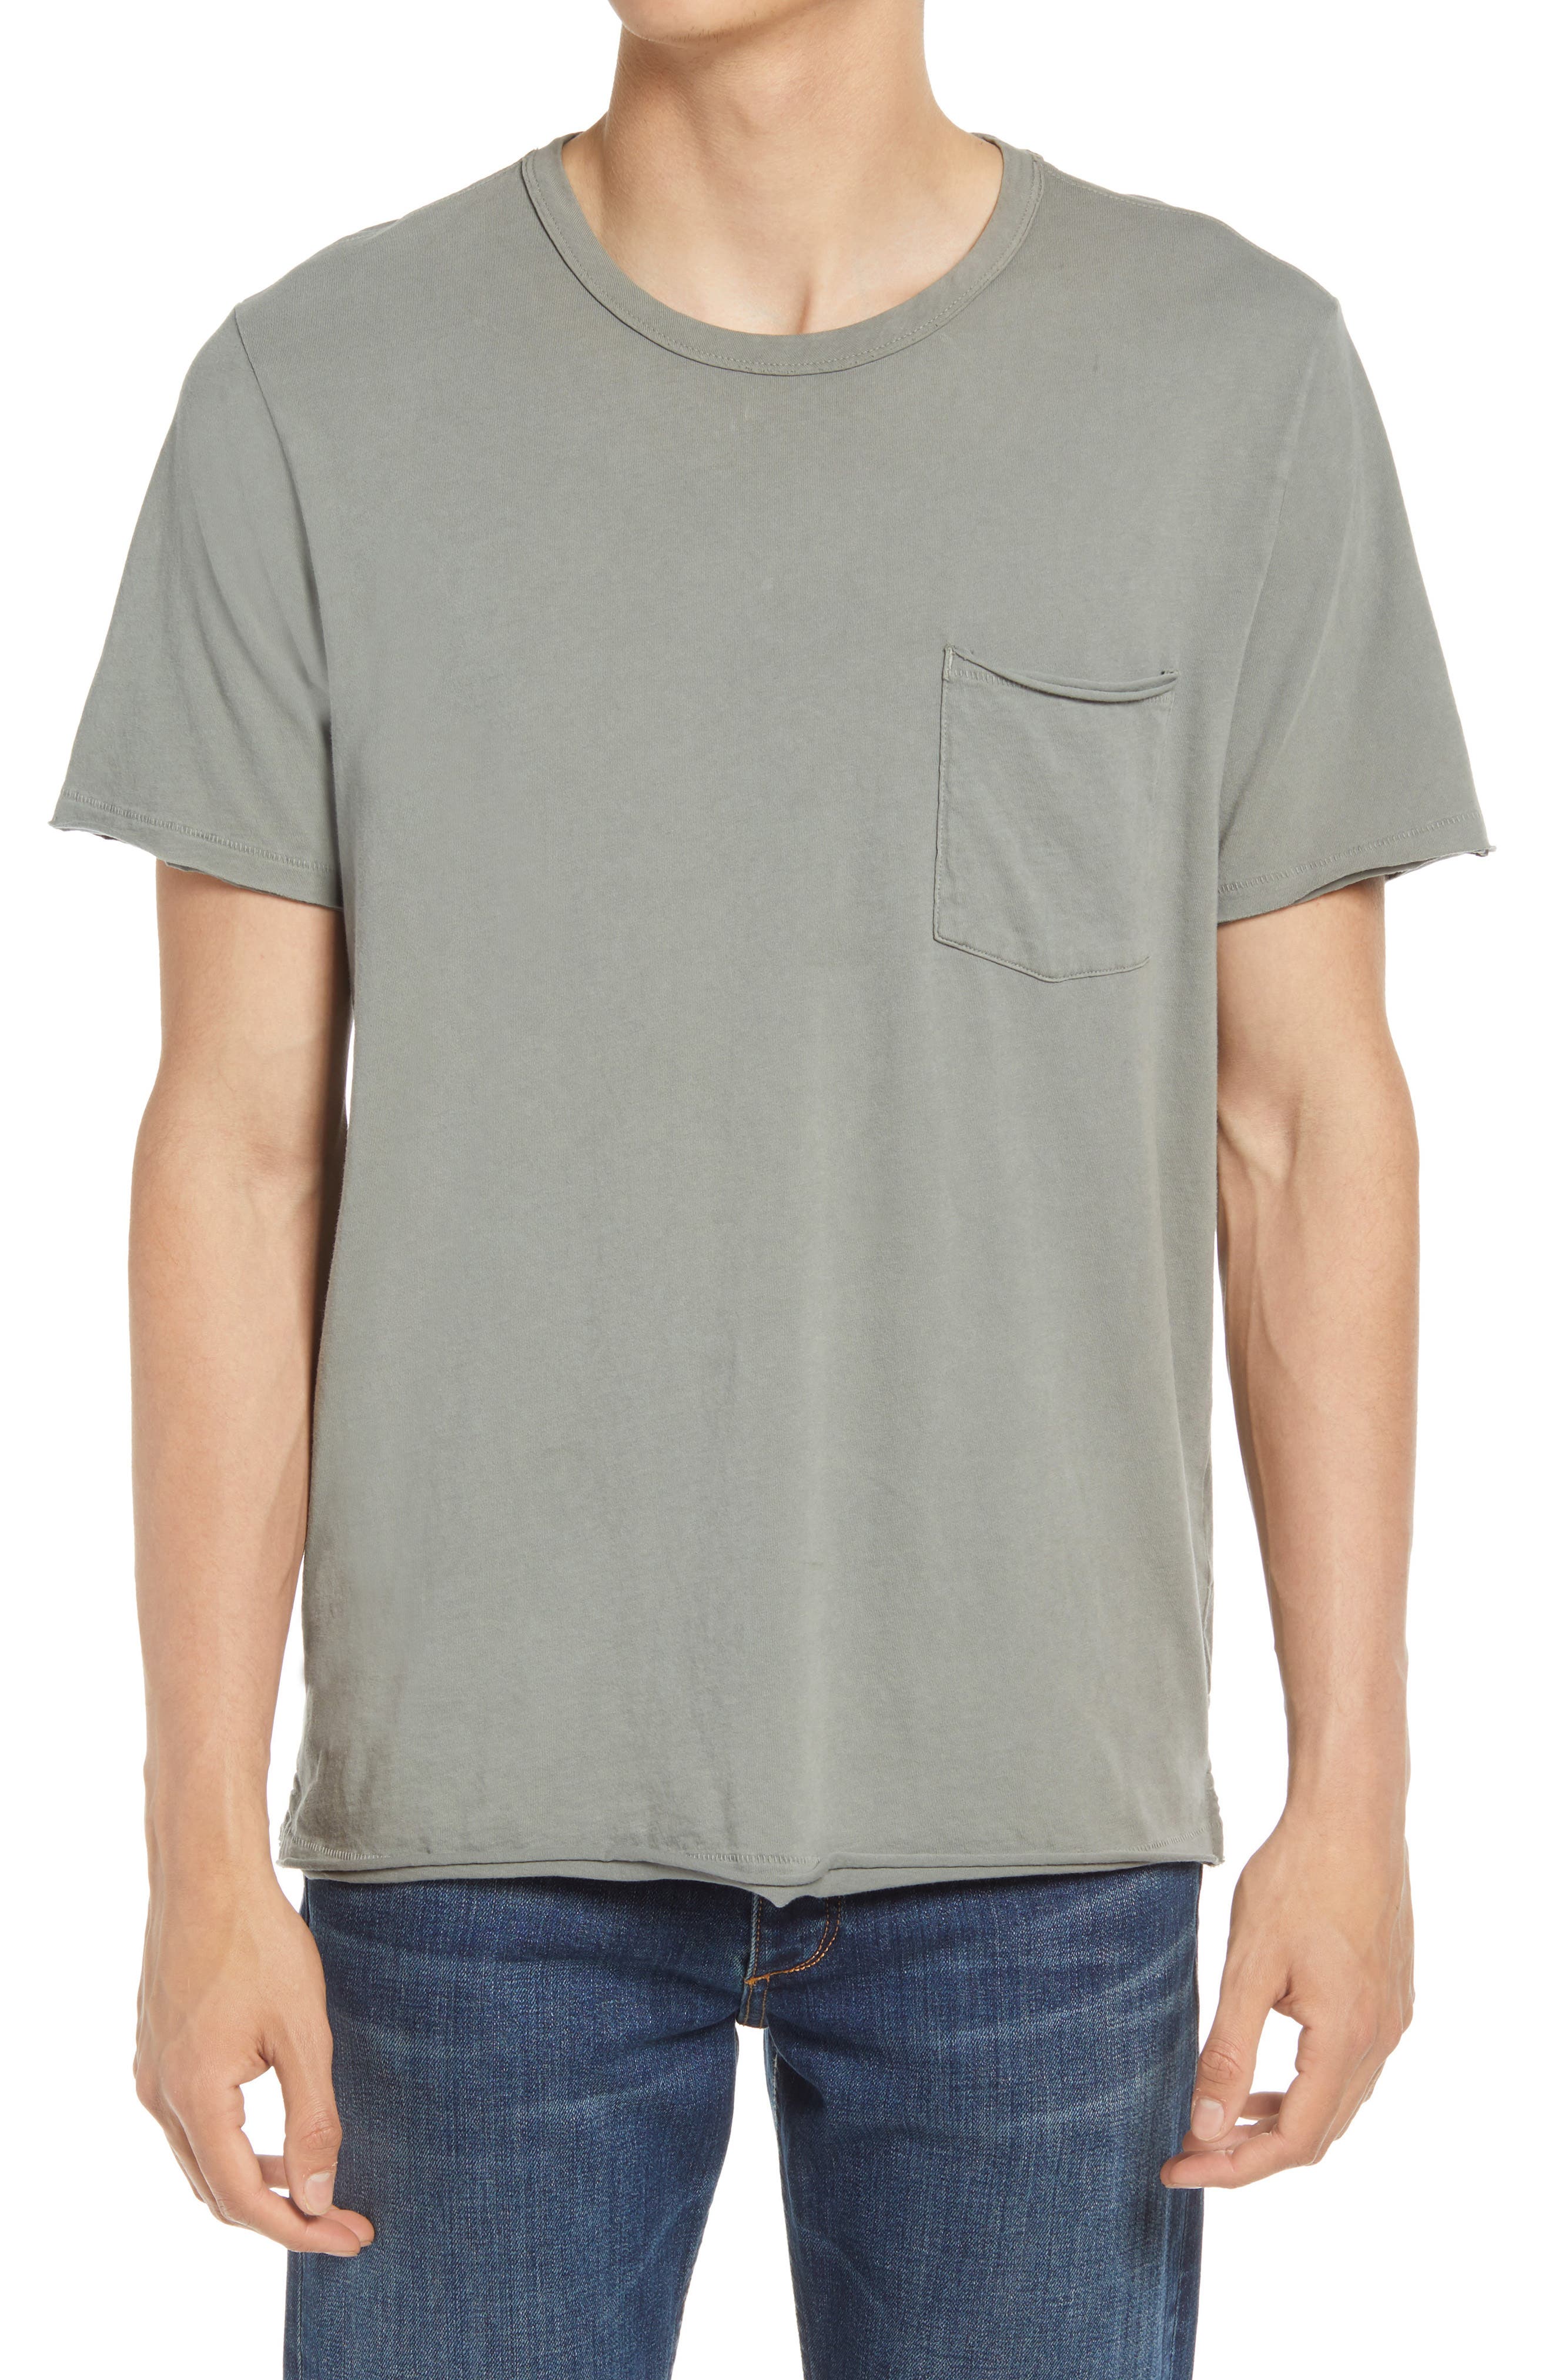 rag & bone Miles Pocket T-Shirt in Blue Grey at Nordstrom, Size X-Large